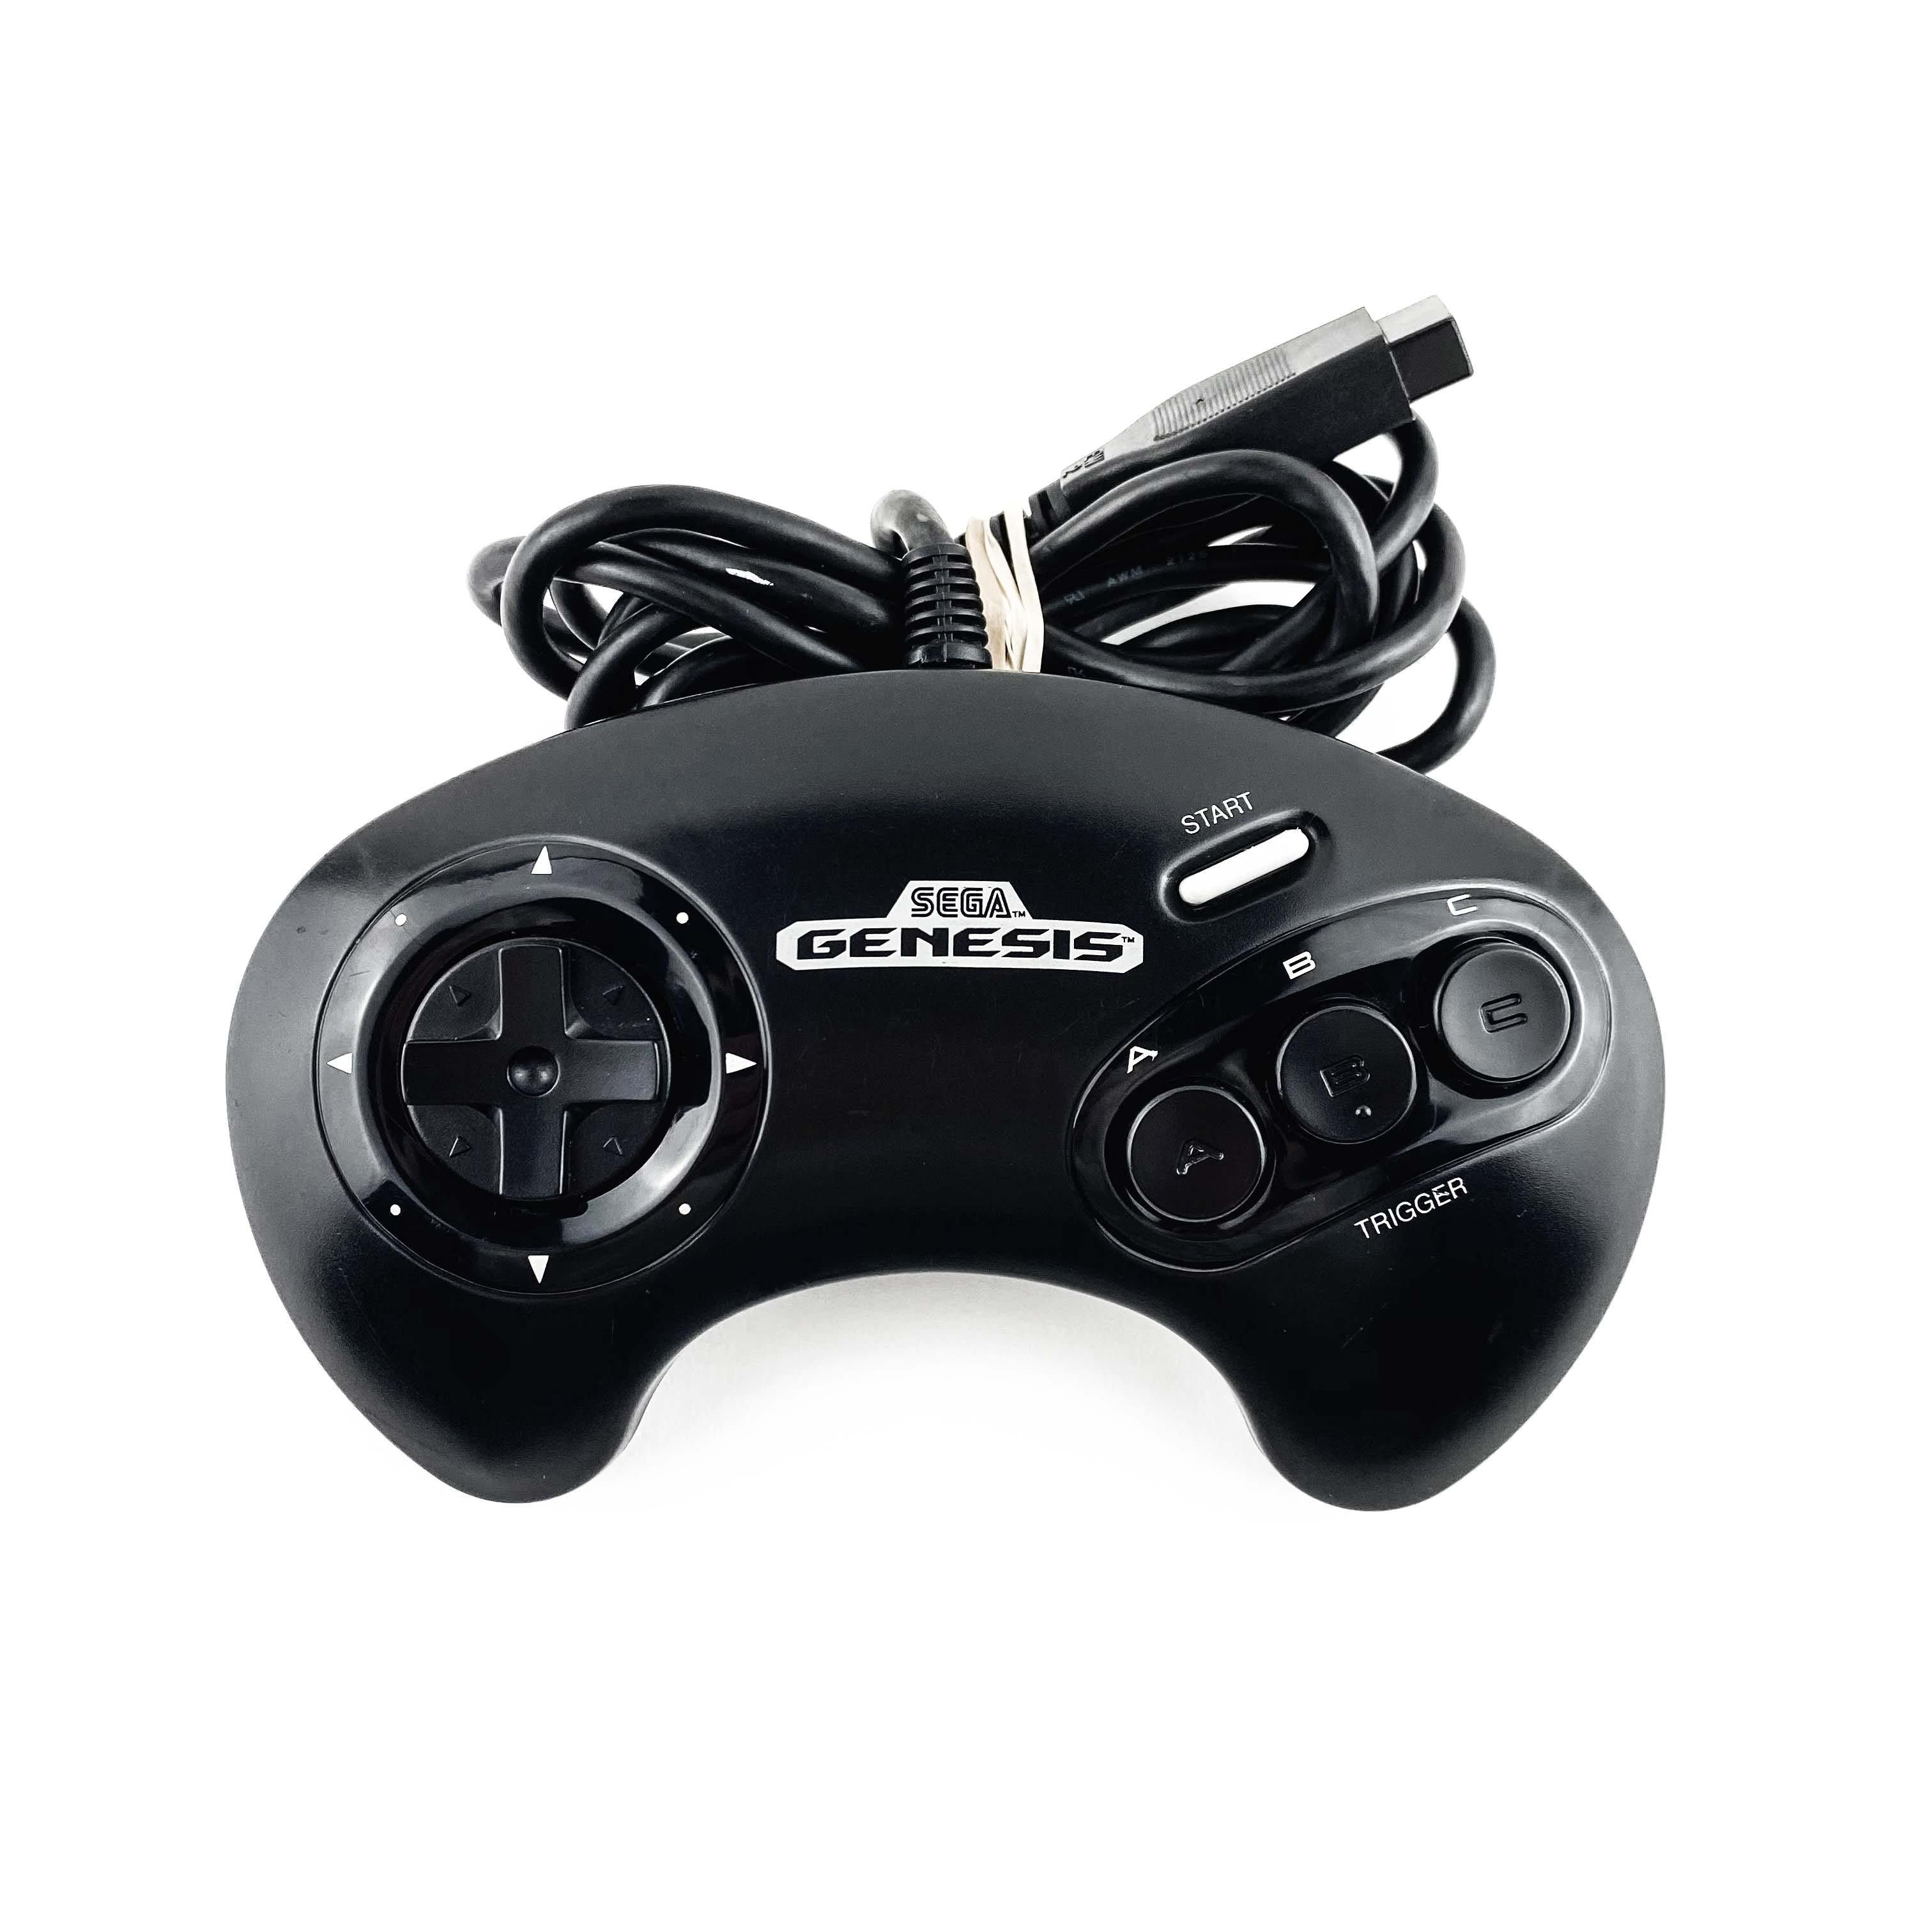 Sega Genesis 3 Button Controller Gamepad (MK-1650)